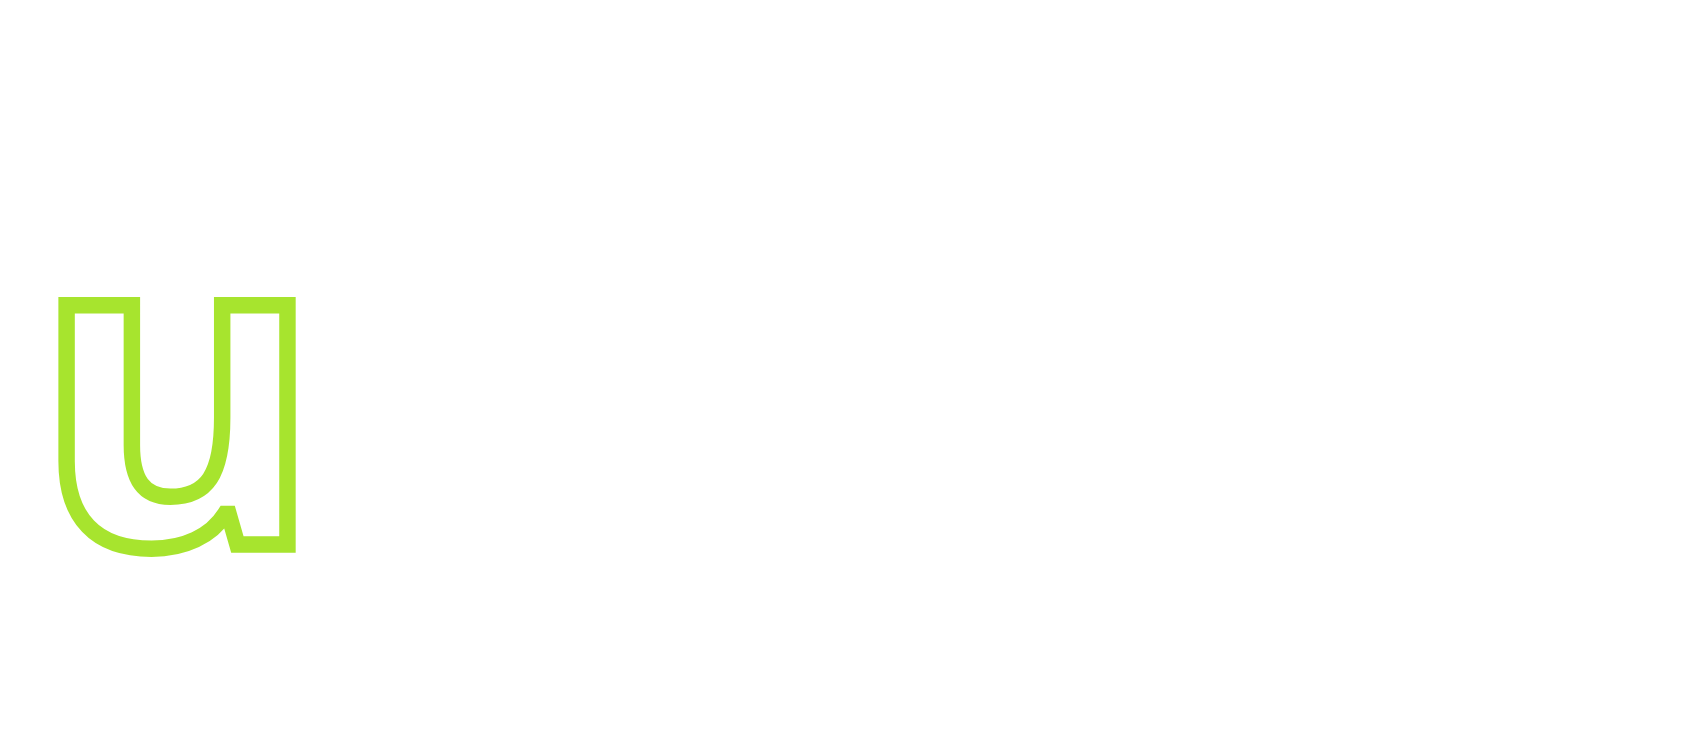 UK Online Bike Shop,